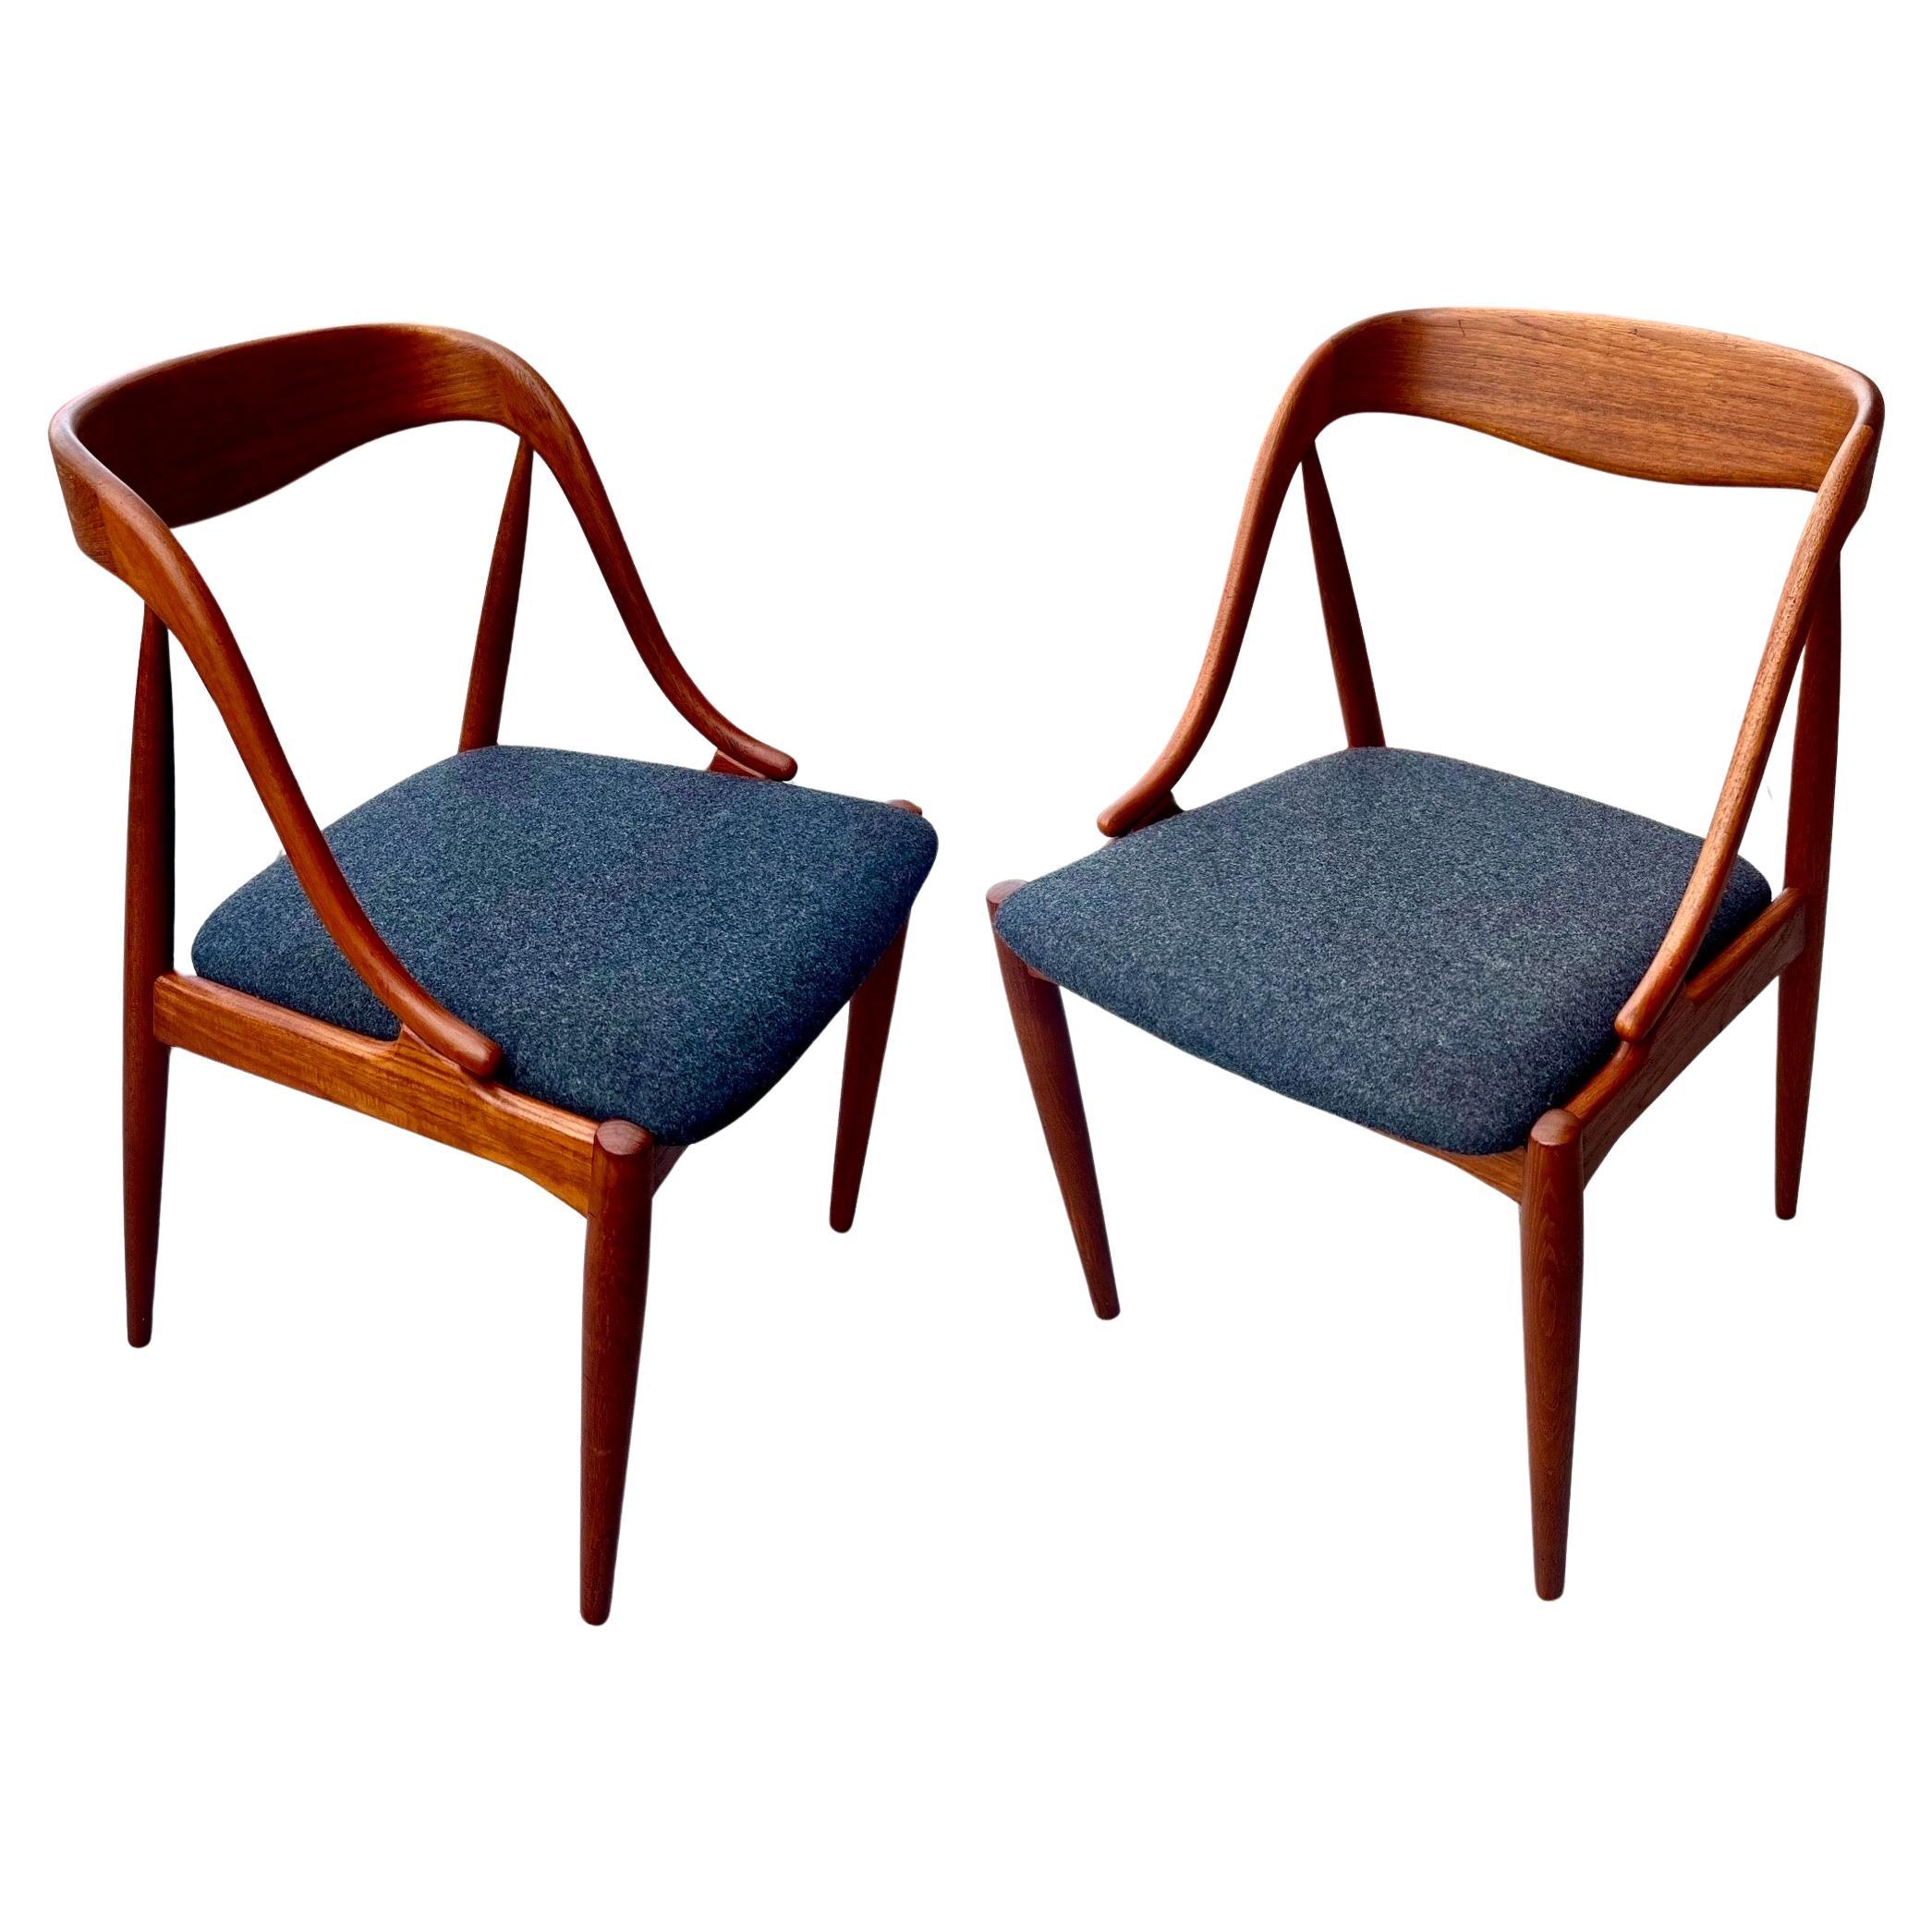 Pair of Danish Modern teak Model 16 Chairs by Johannes Andersen for Uldum Mobler For Sale